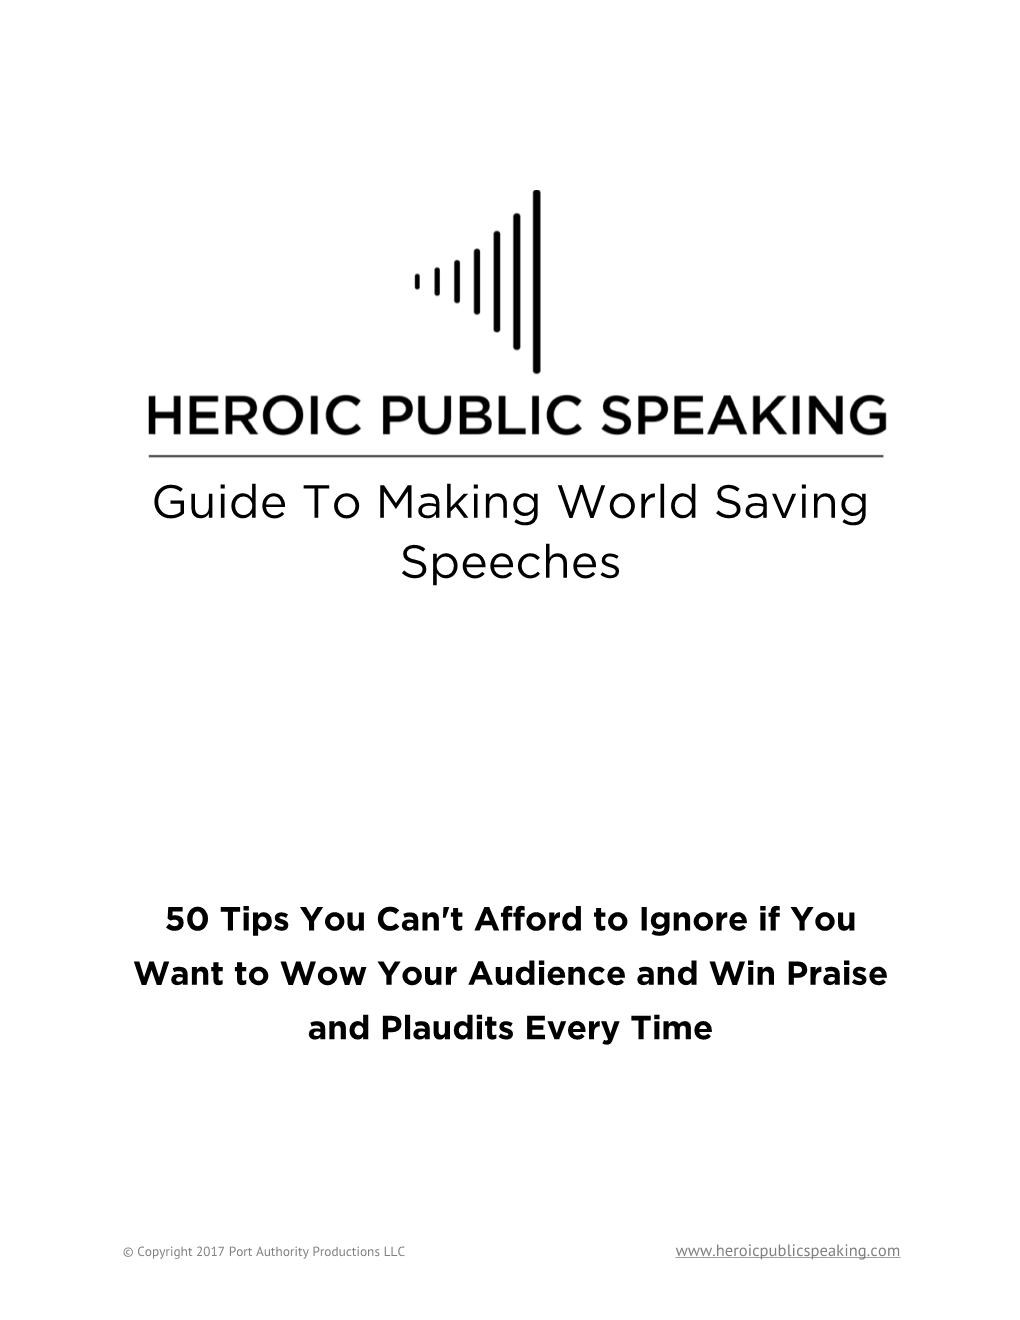 Guide to Making World Saving Speeches